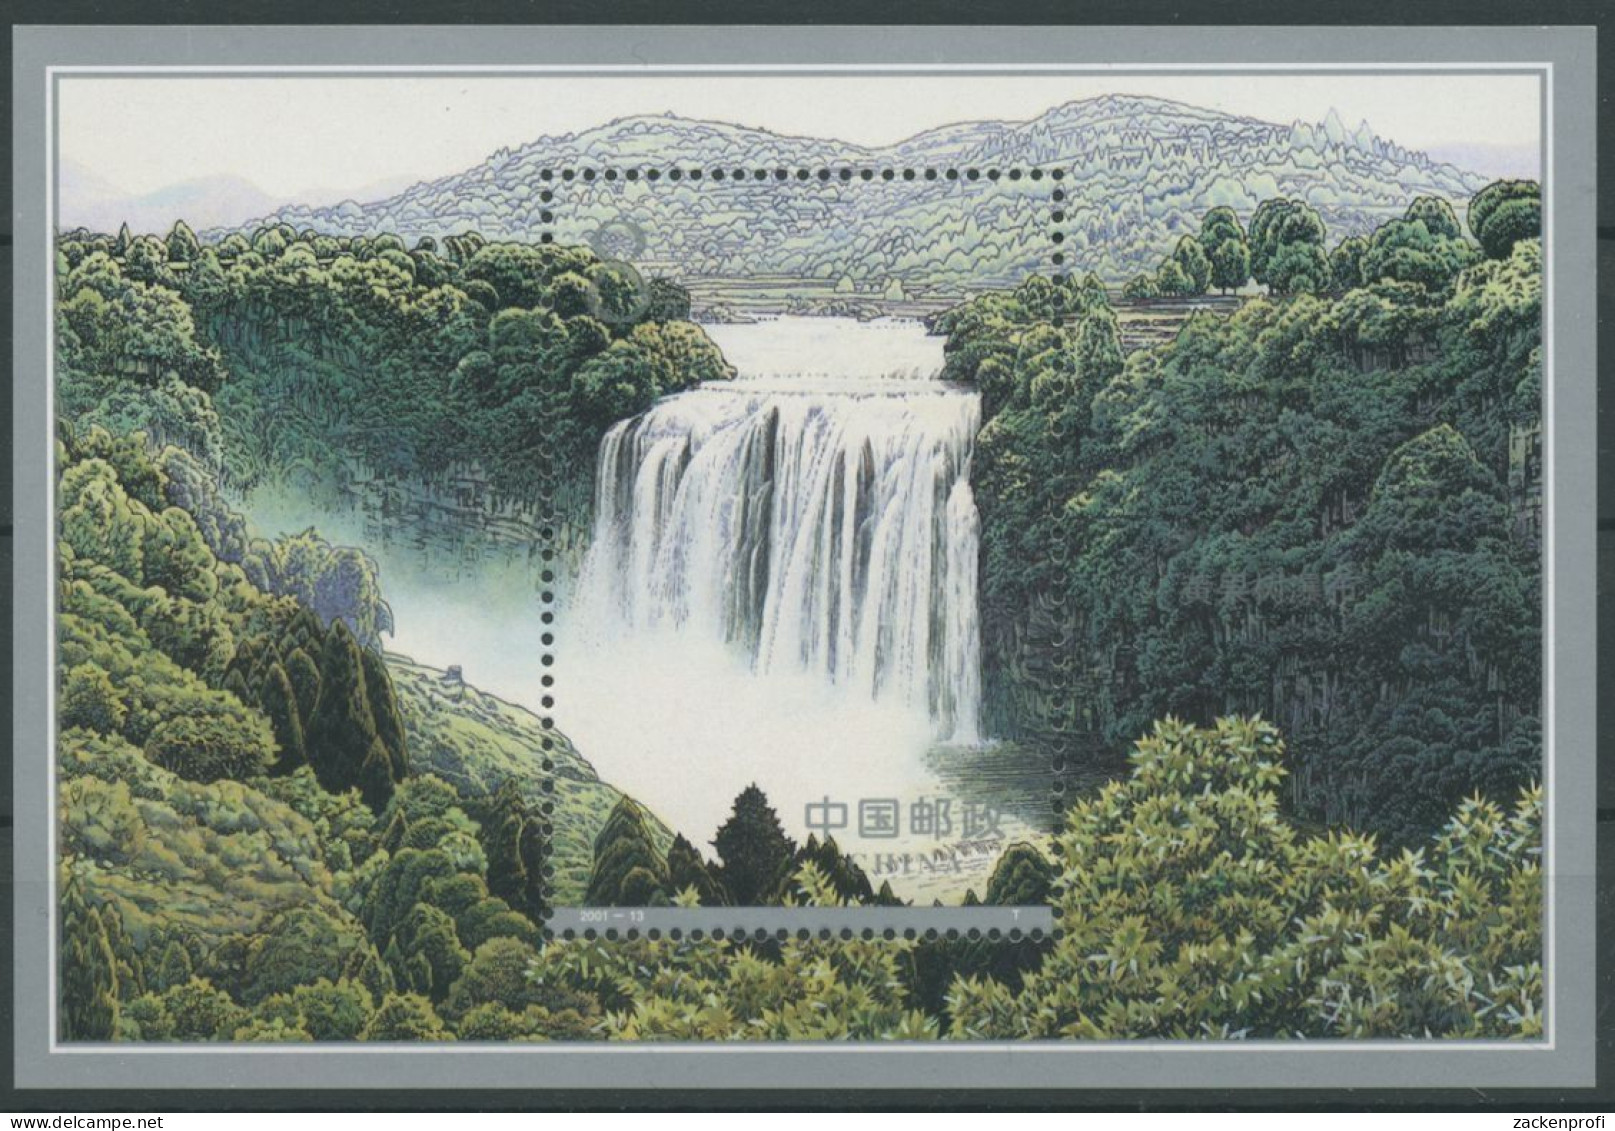 China 2001 Wasserfall Huangguoshu Block 99 Postfrisch (C8262) - Blocchi & Foglietti